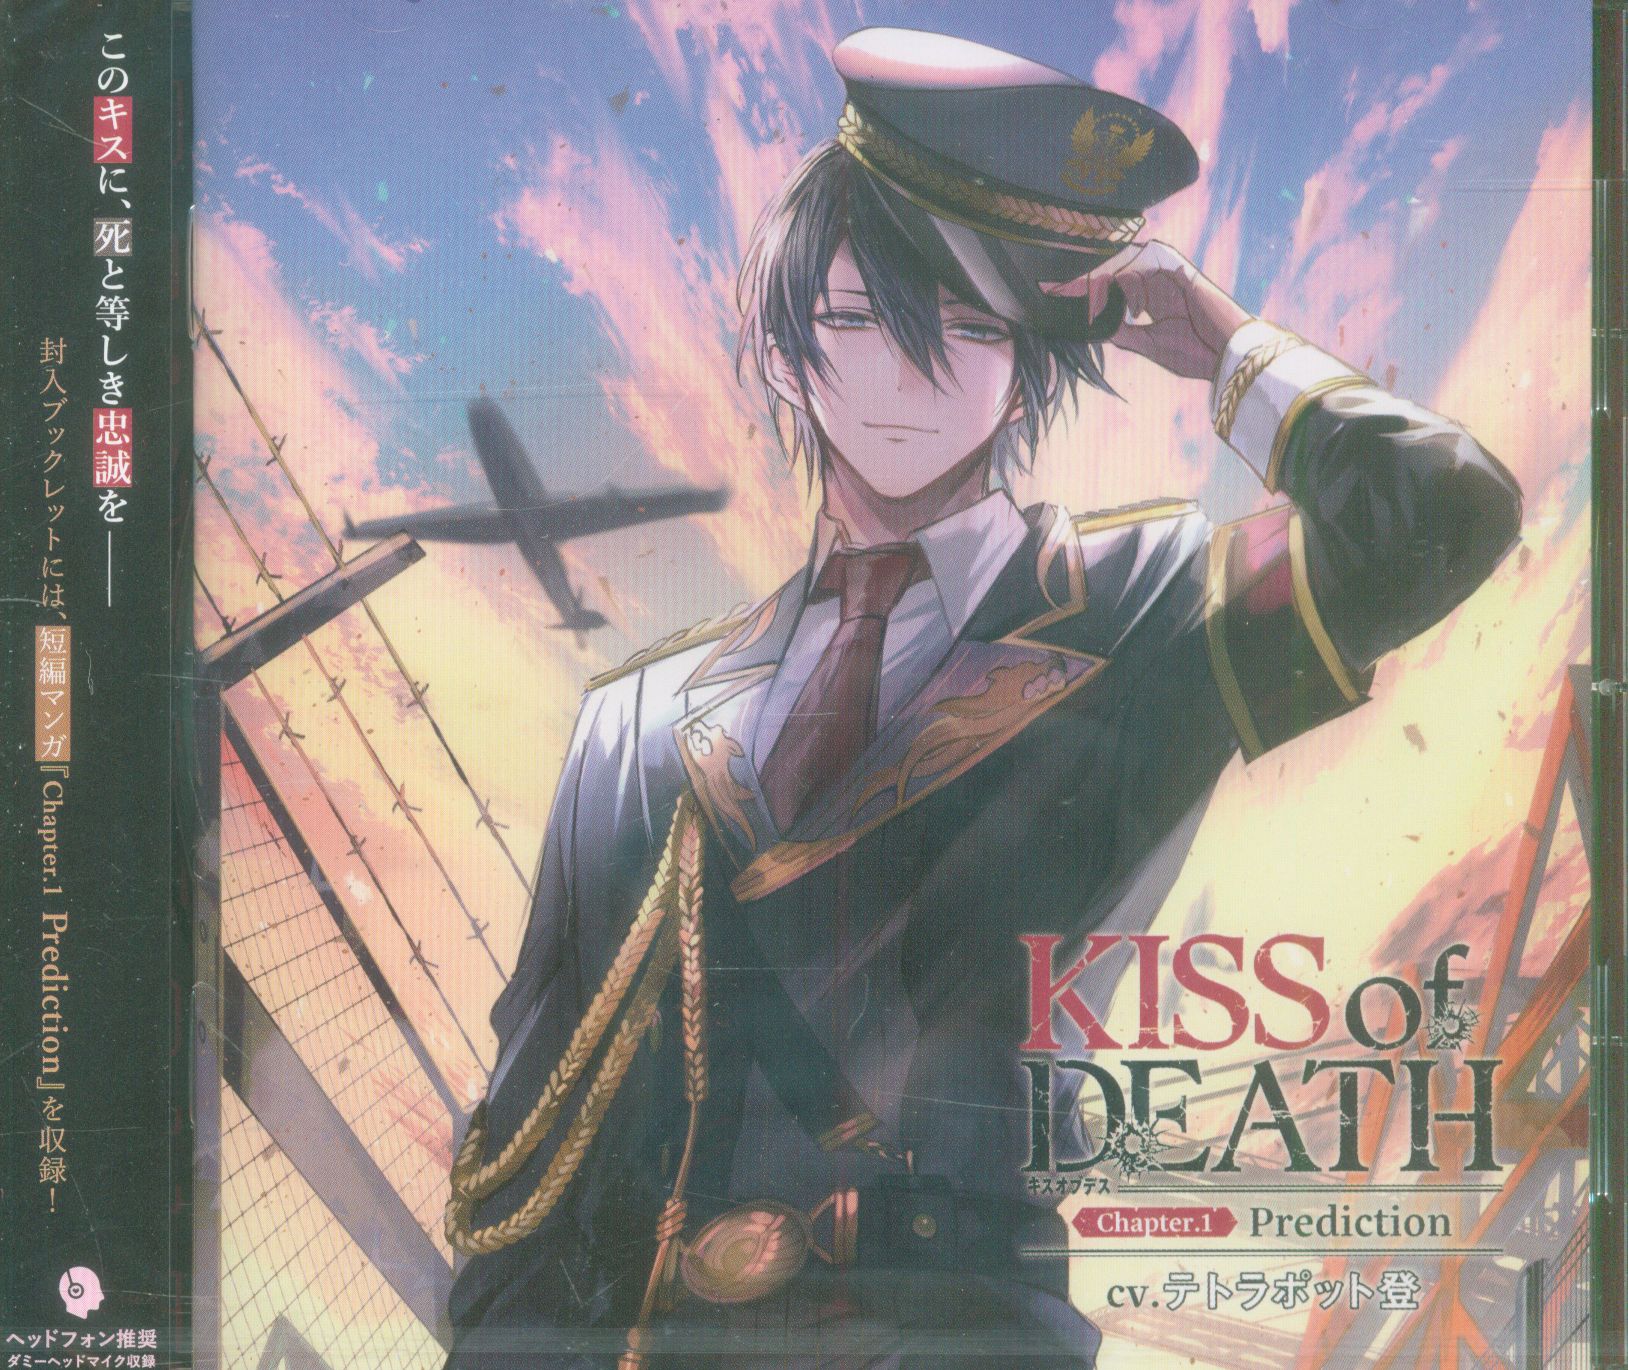 KISS of DEATH 1 CV.テトラポット登 - CD